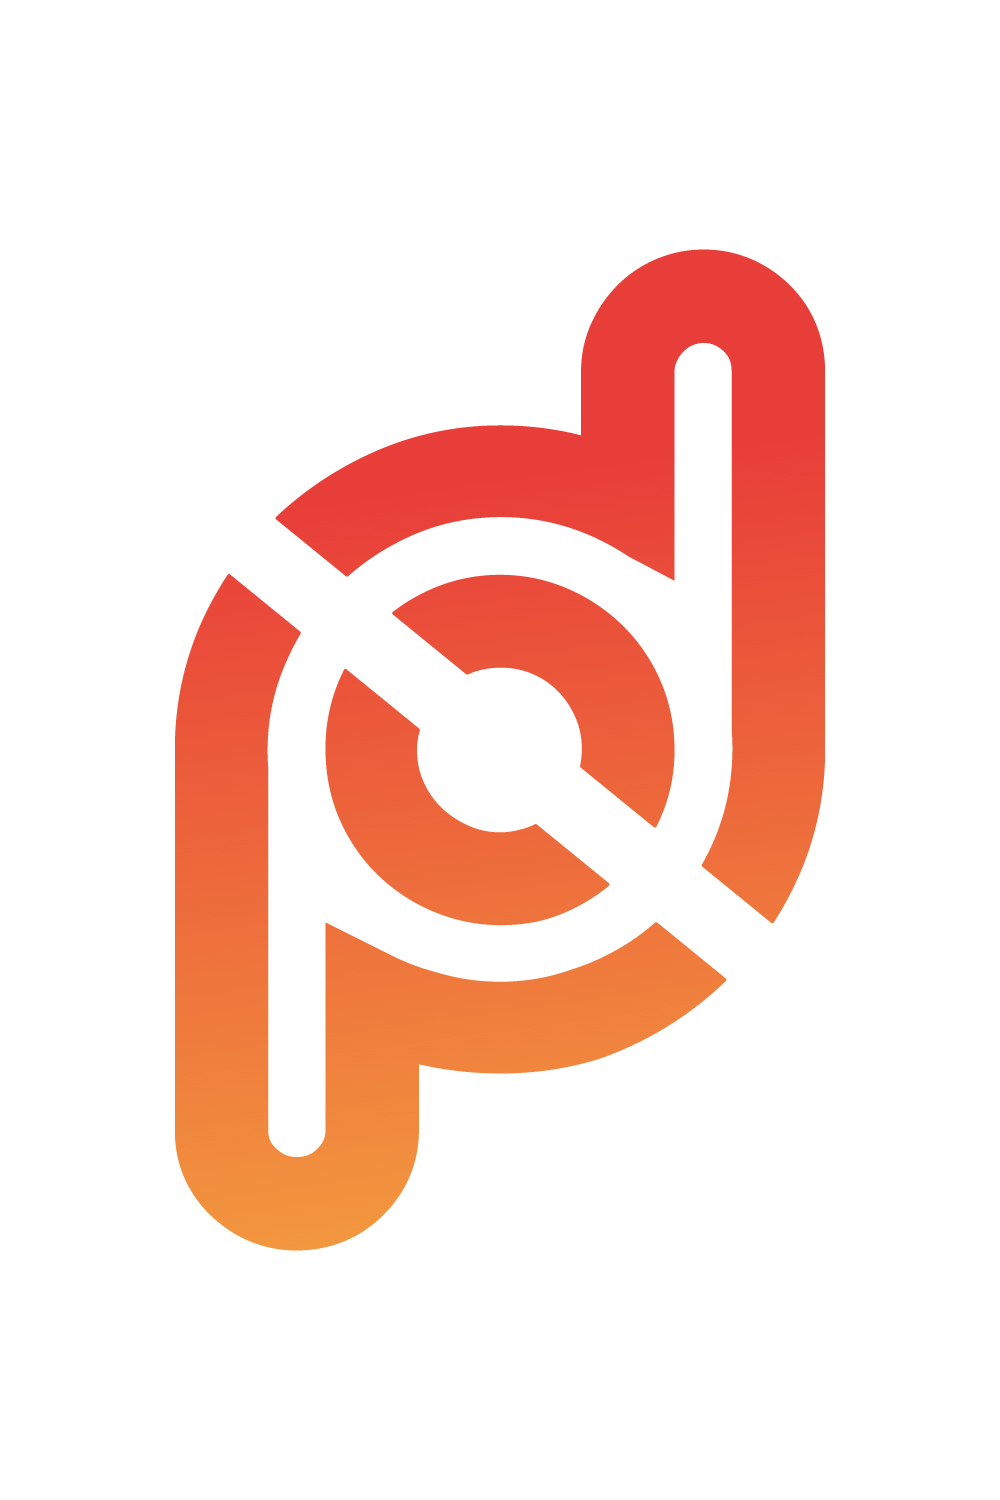 Initials PD letters logo design PD logo template, vector royalty orange color logo pinterest preview image.